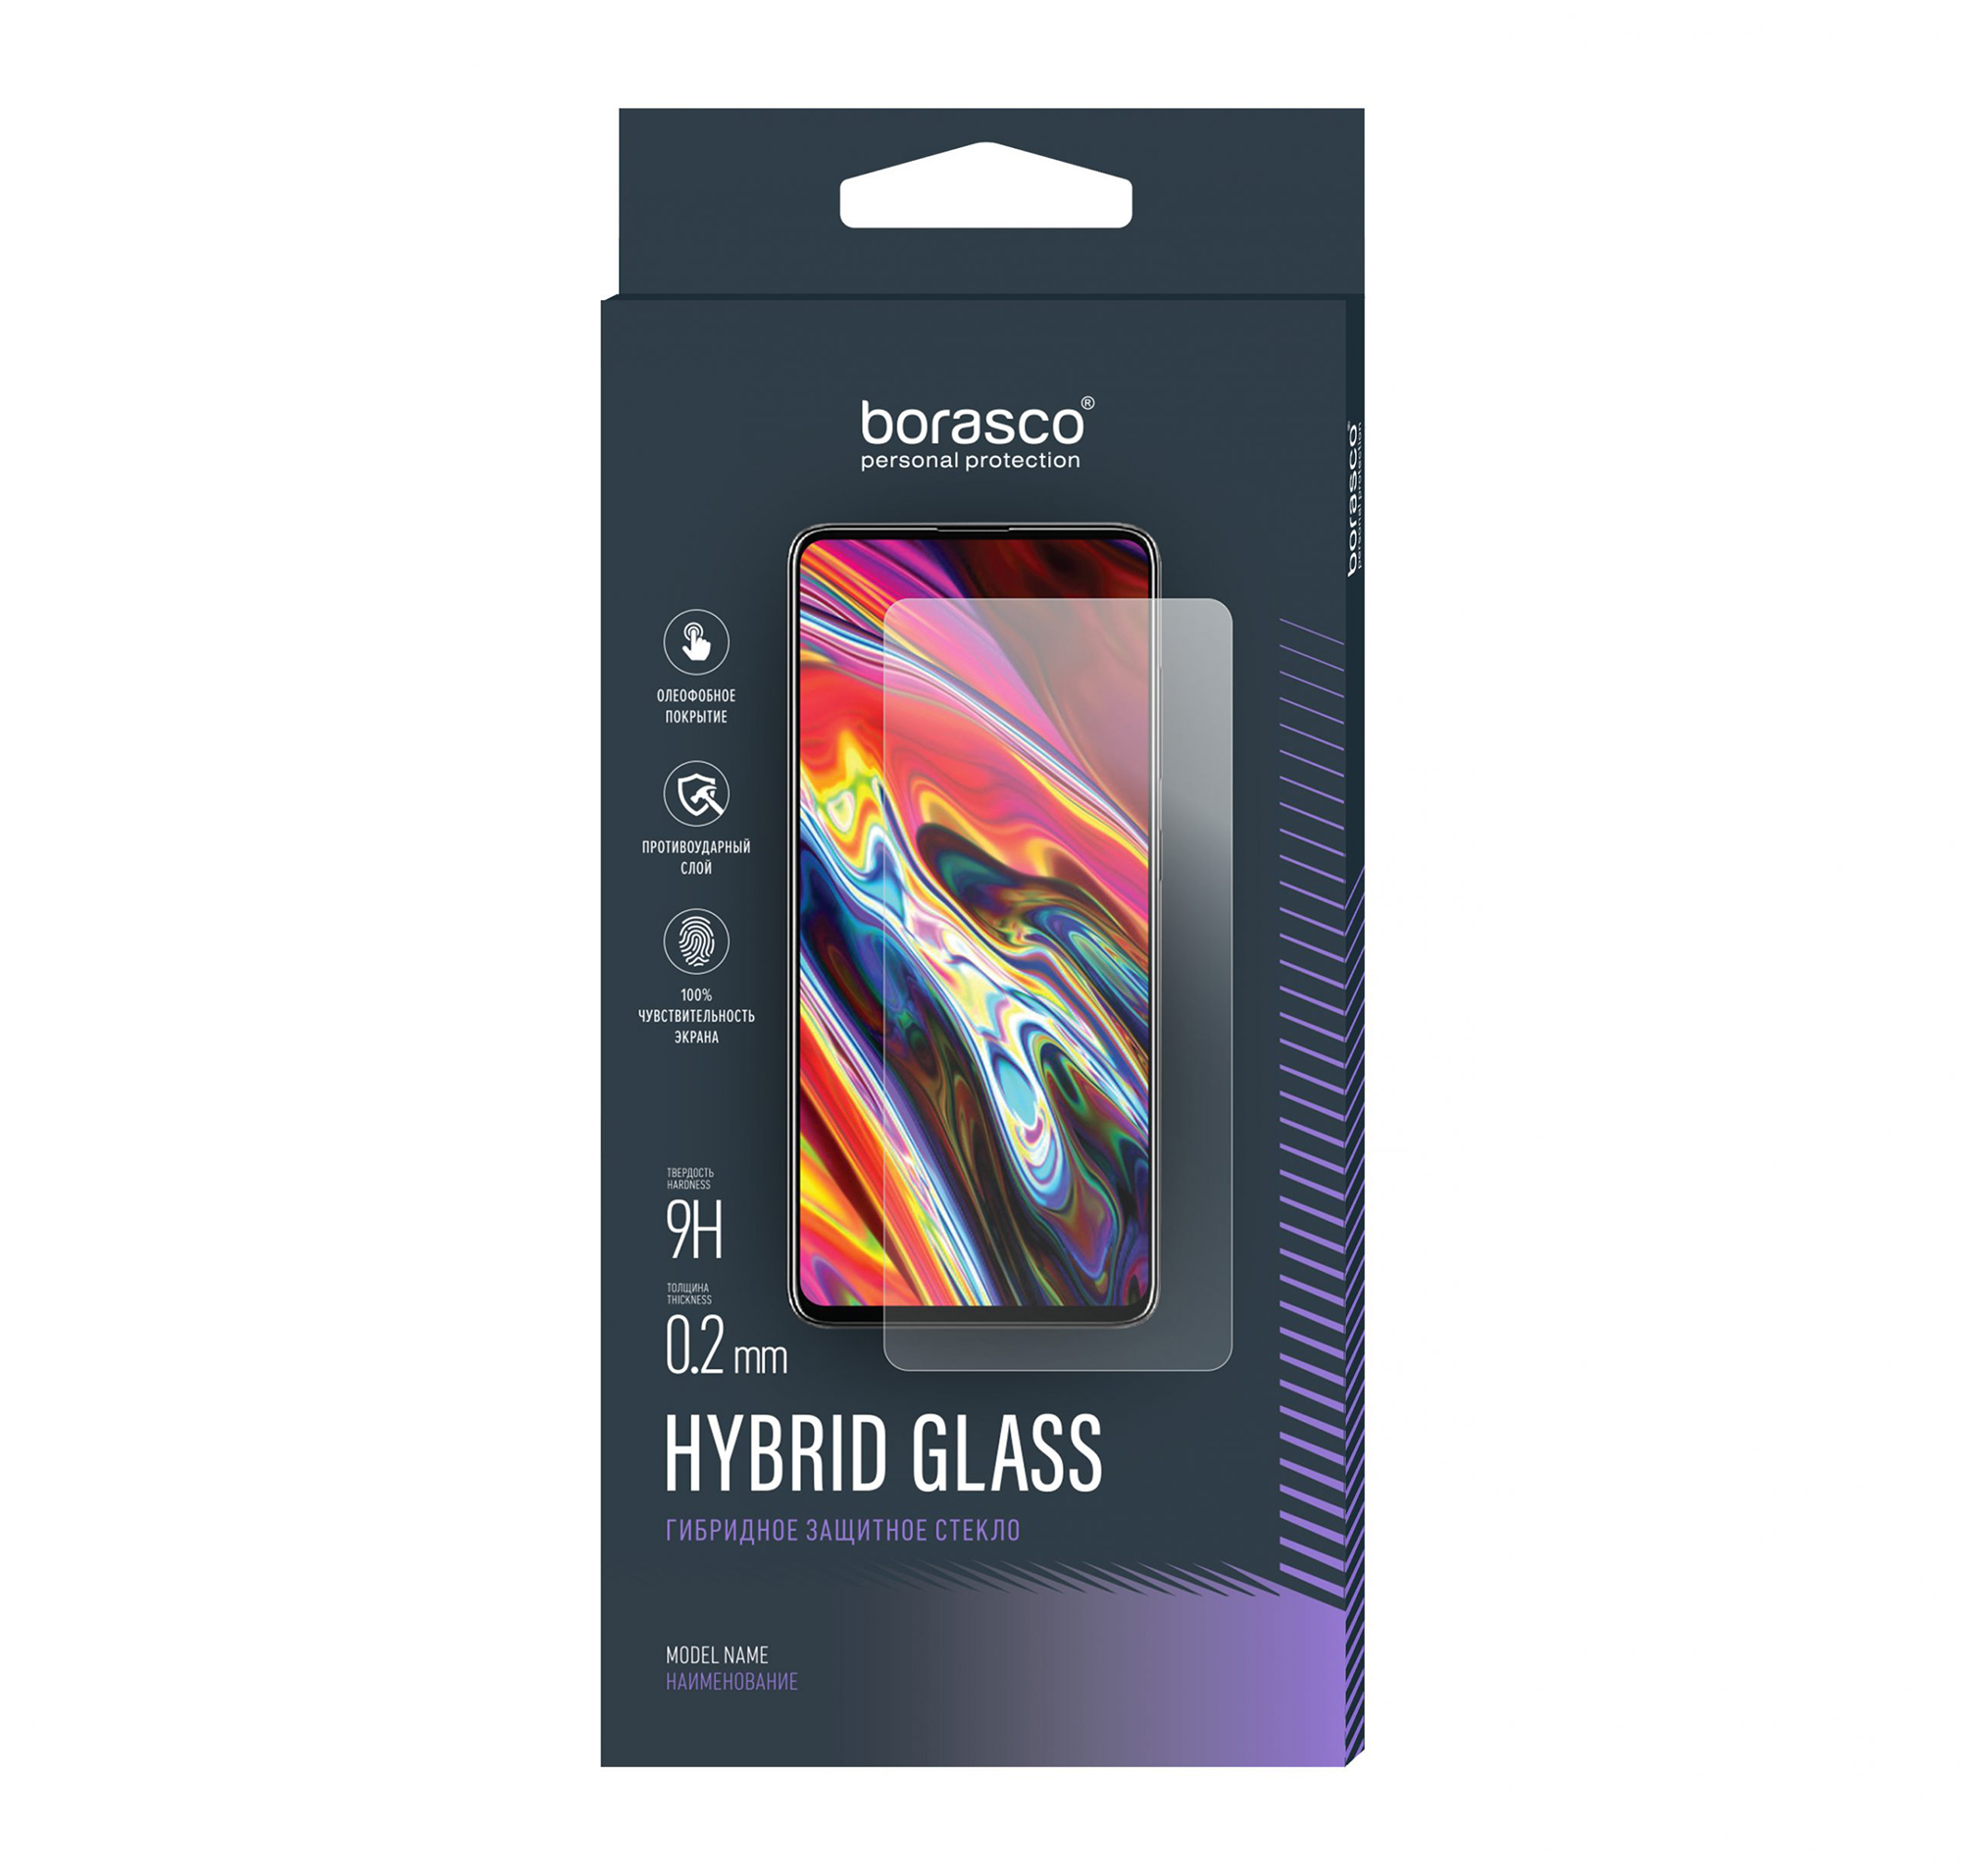 Защитное стекло Hybrid Glass для OPPO Reno 2Z/ Reno 2F стекло защитное krutoff для oppo reno z 22168